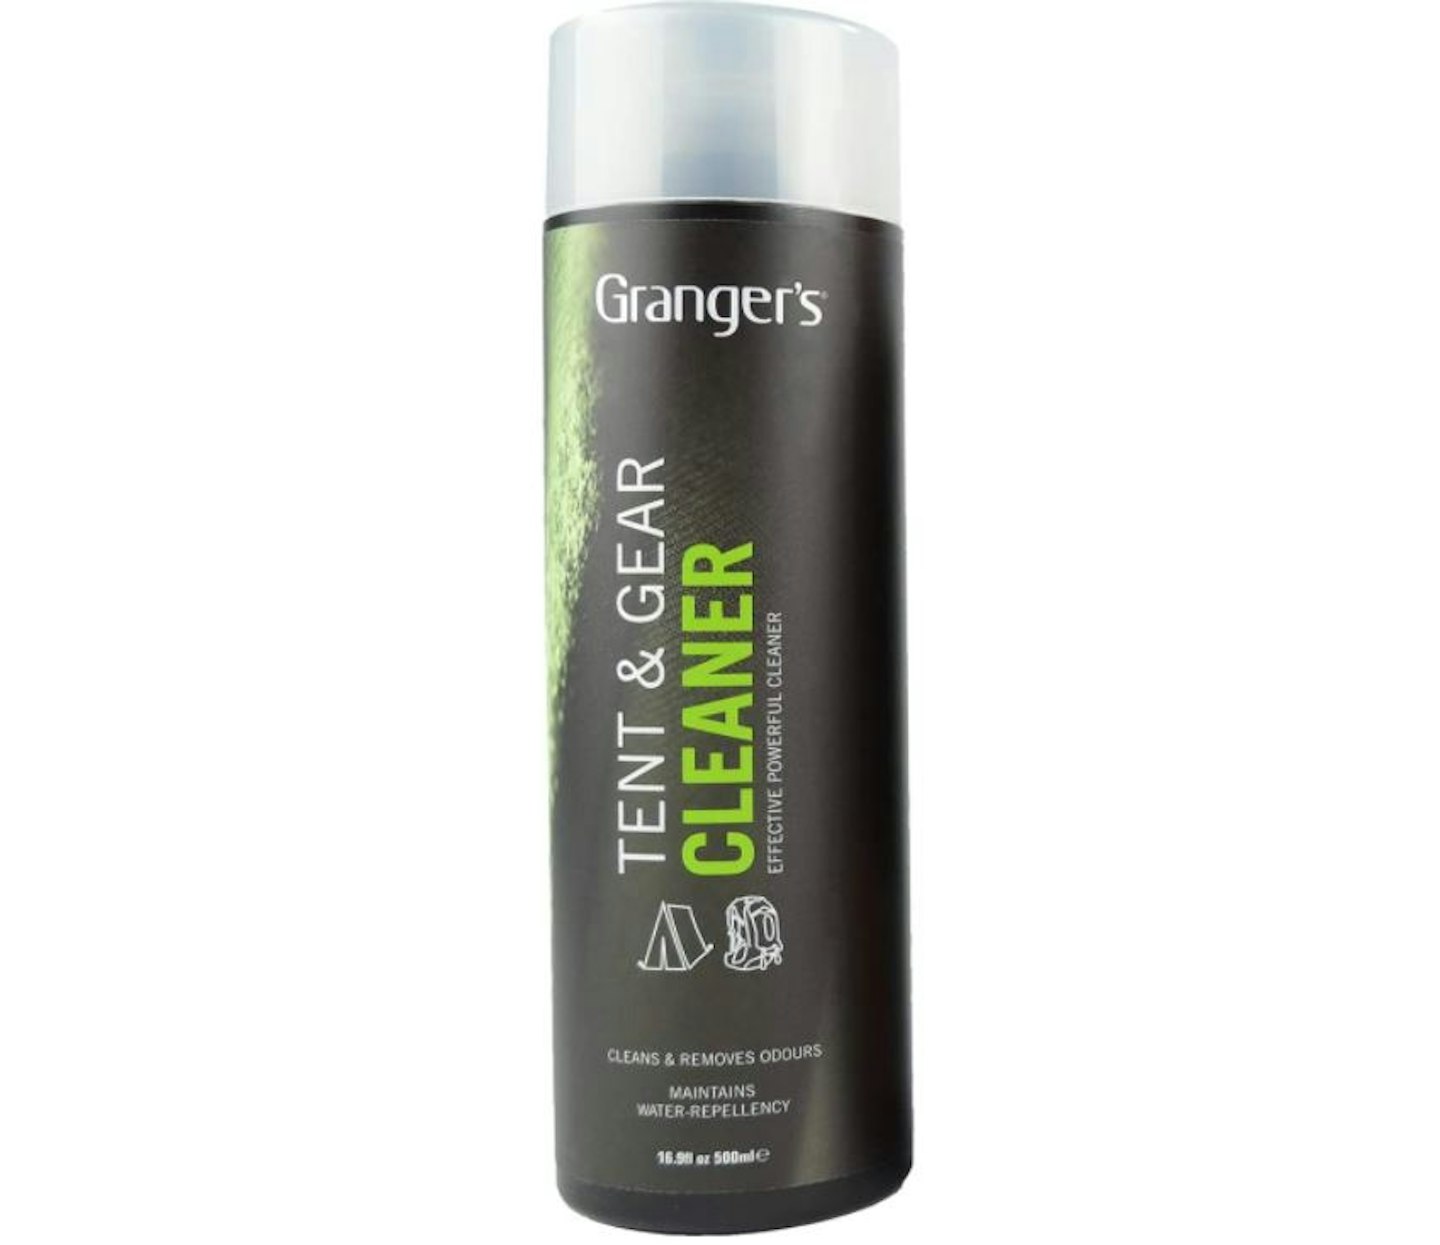 Grangers Tent & Gear Cleaner 500ml